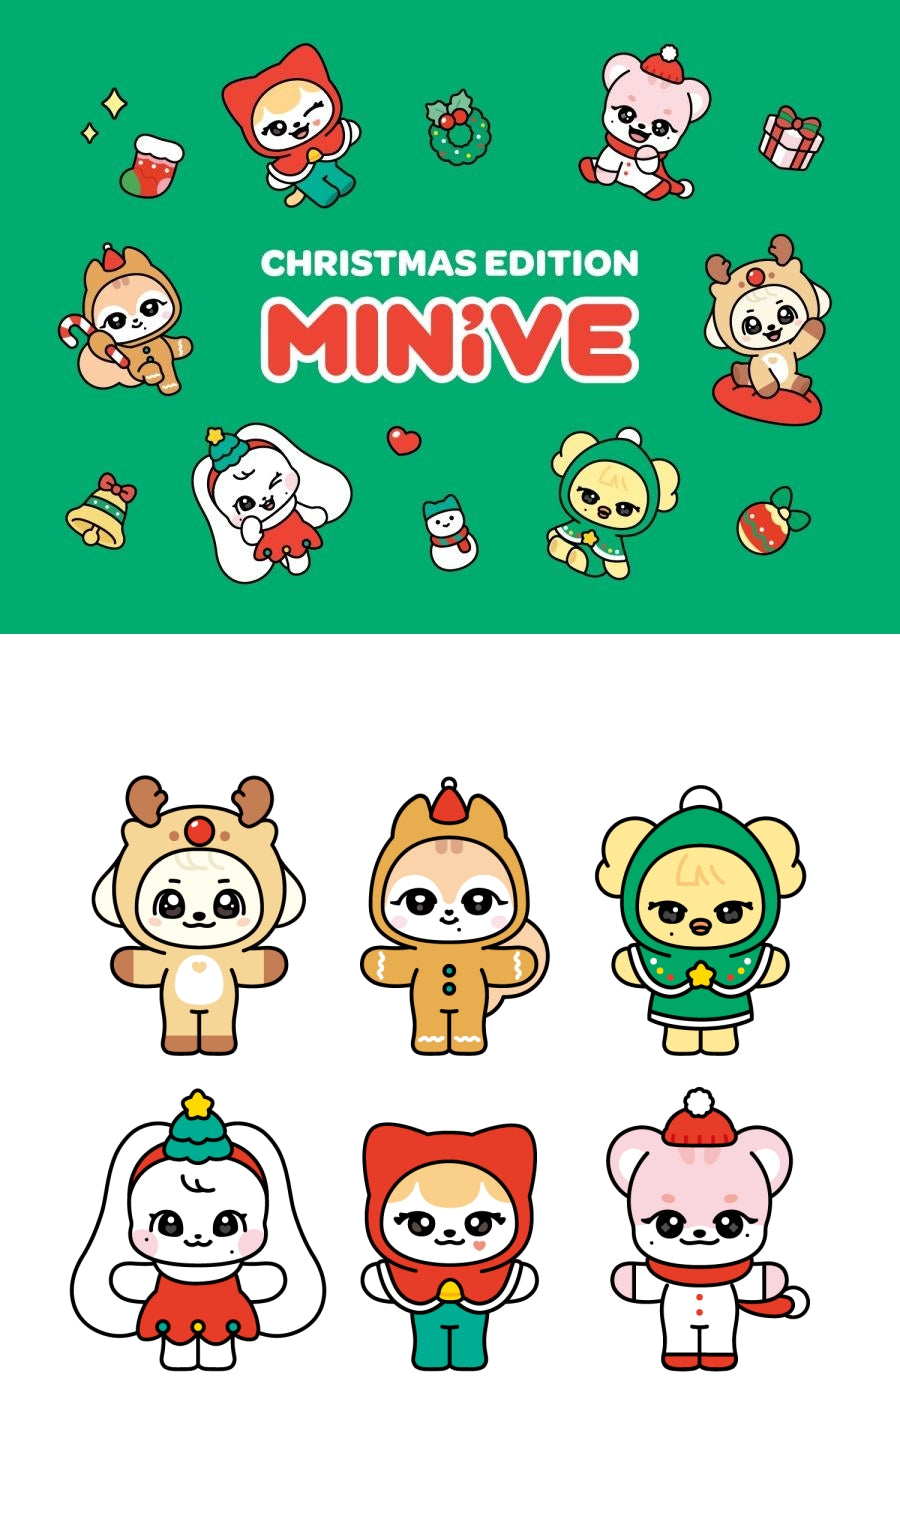 IVE - Minive Christmas Plush Doll (Choose Member)